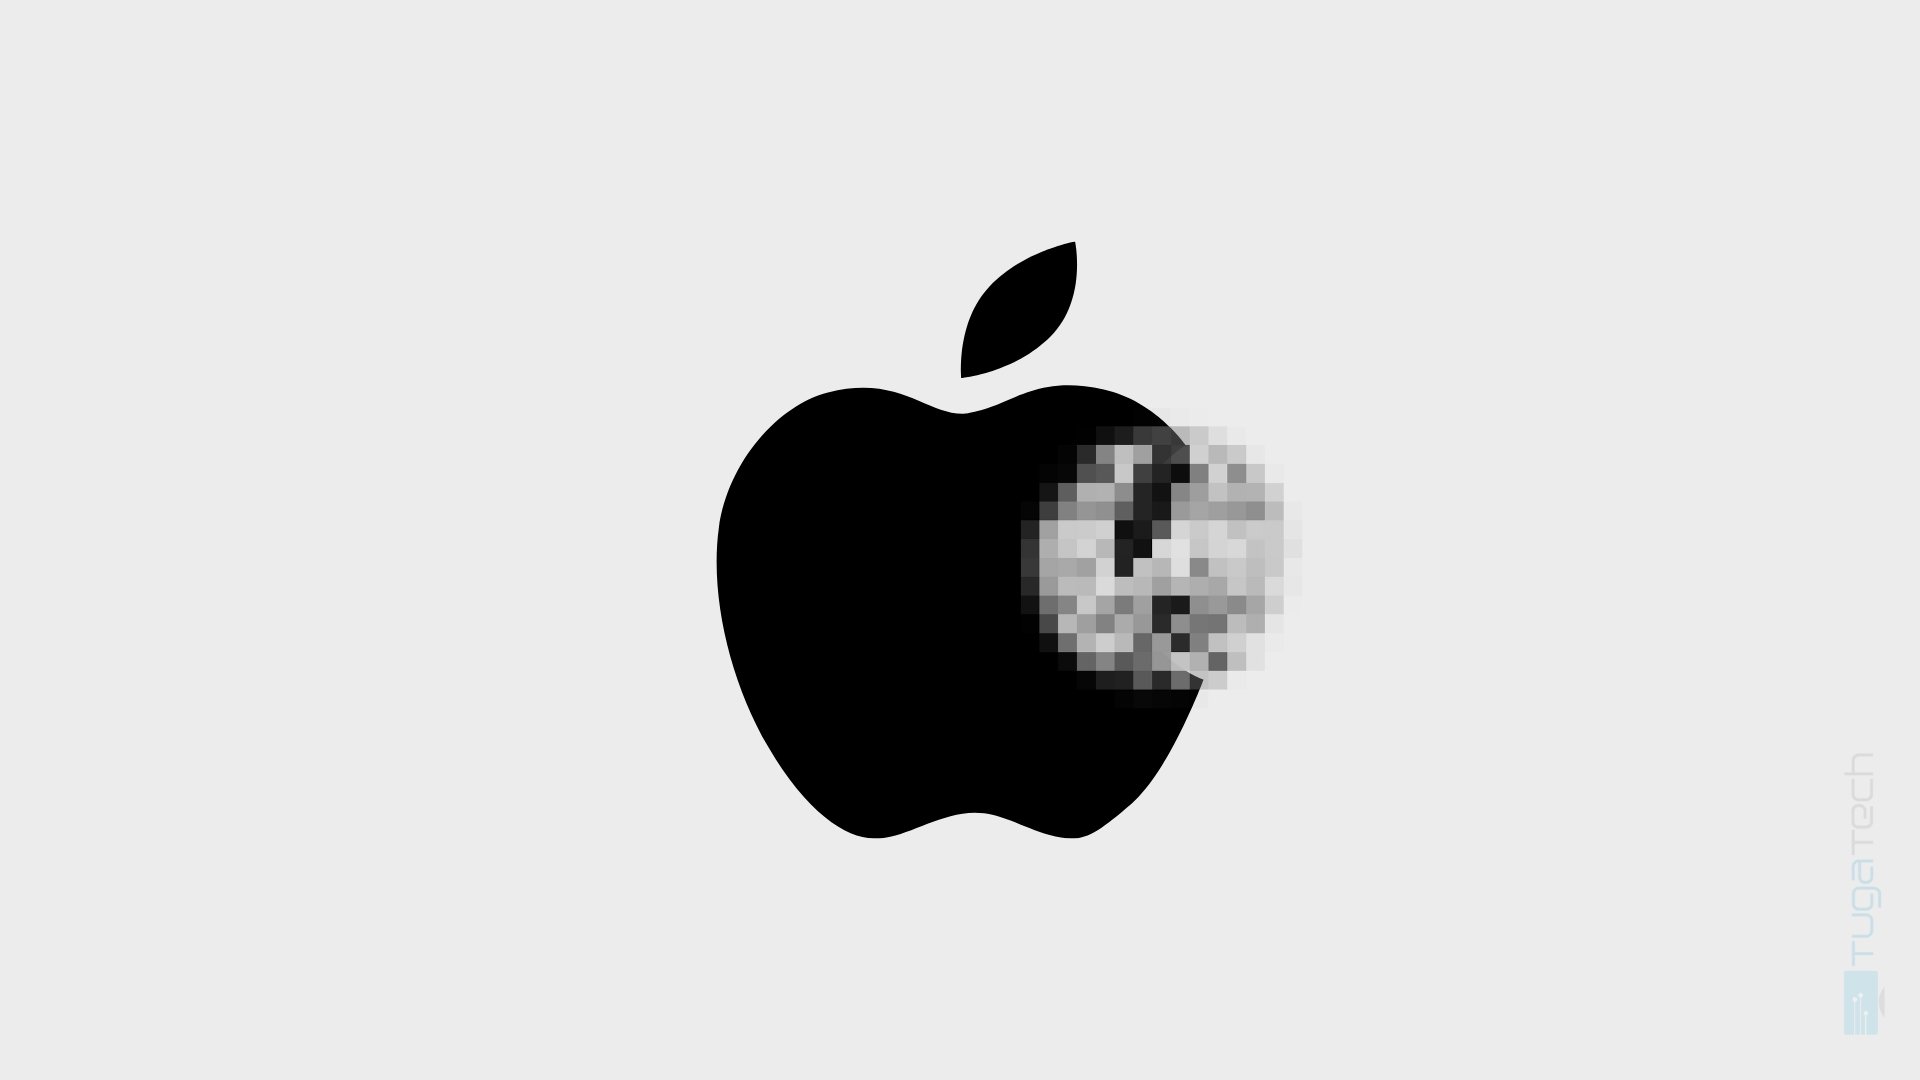 Apple logo censurado